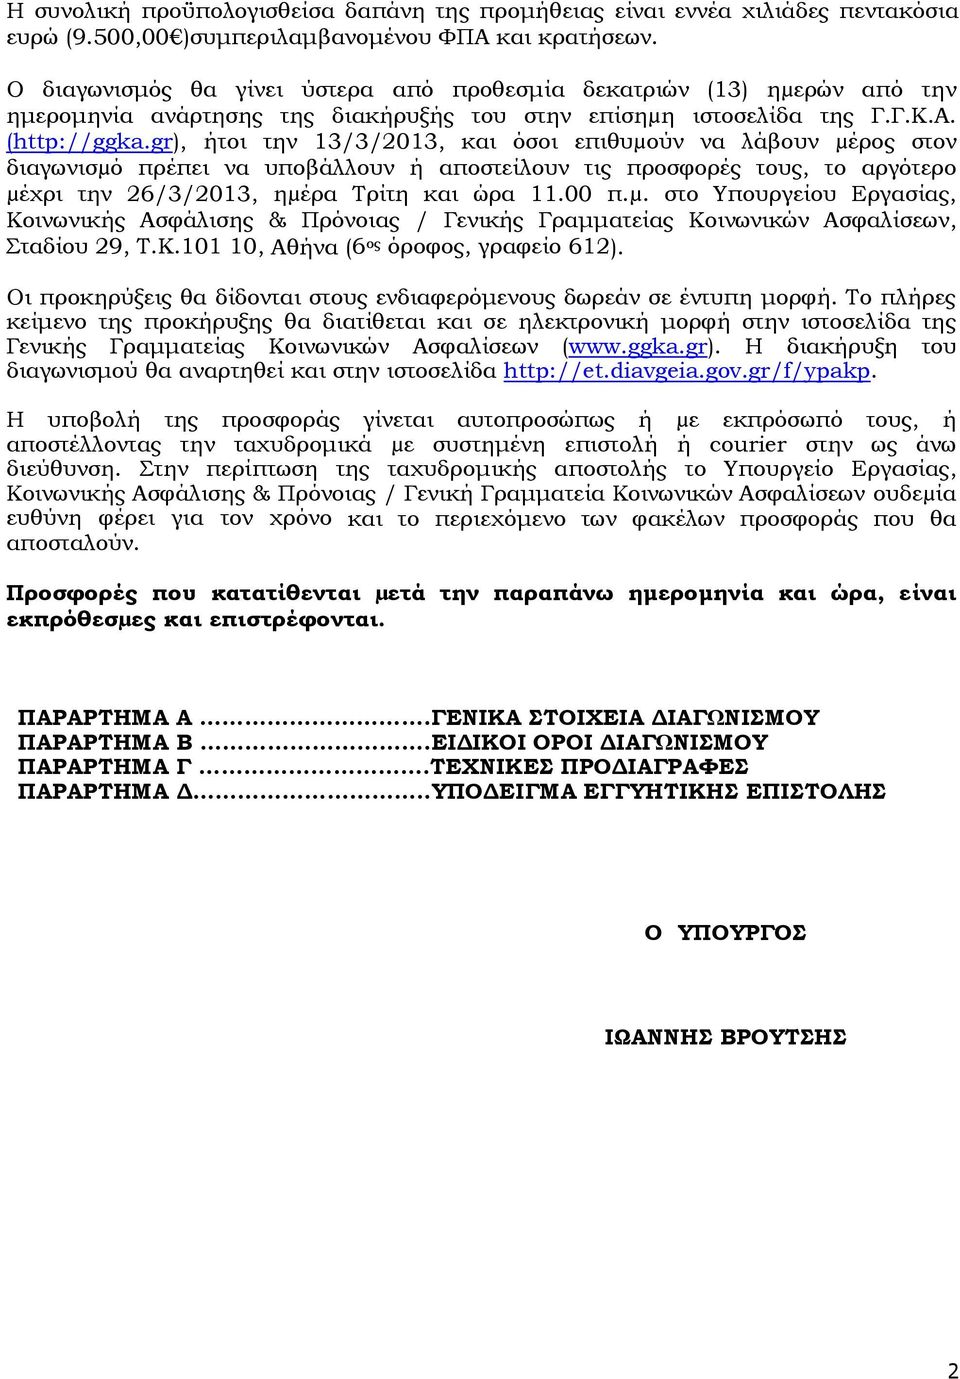 gr), ήτοι την 13/3/2013, και όσοι επιθυµούν να λάβουν µέρος στον διαγωνισµό πρέπει να υποβάλλουν ή αποστείλουν τις προσφορές τους, το αργότερο µέχρι την 26/3/2013, ηµέρα Τρίτη και ώρα 11.00 π.µ. στο Υπουργείου Εργασίας, Κοινωνικής Ασφάλισης & Πρόνοιας / Γενικής Γραμματείας Κοινωνικών Ασφαλίσεων, Σταδίου 29, Τ.